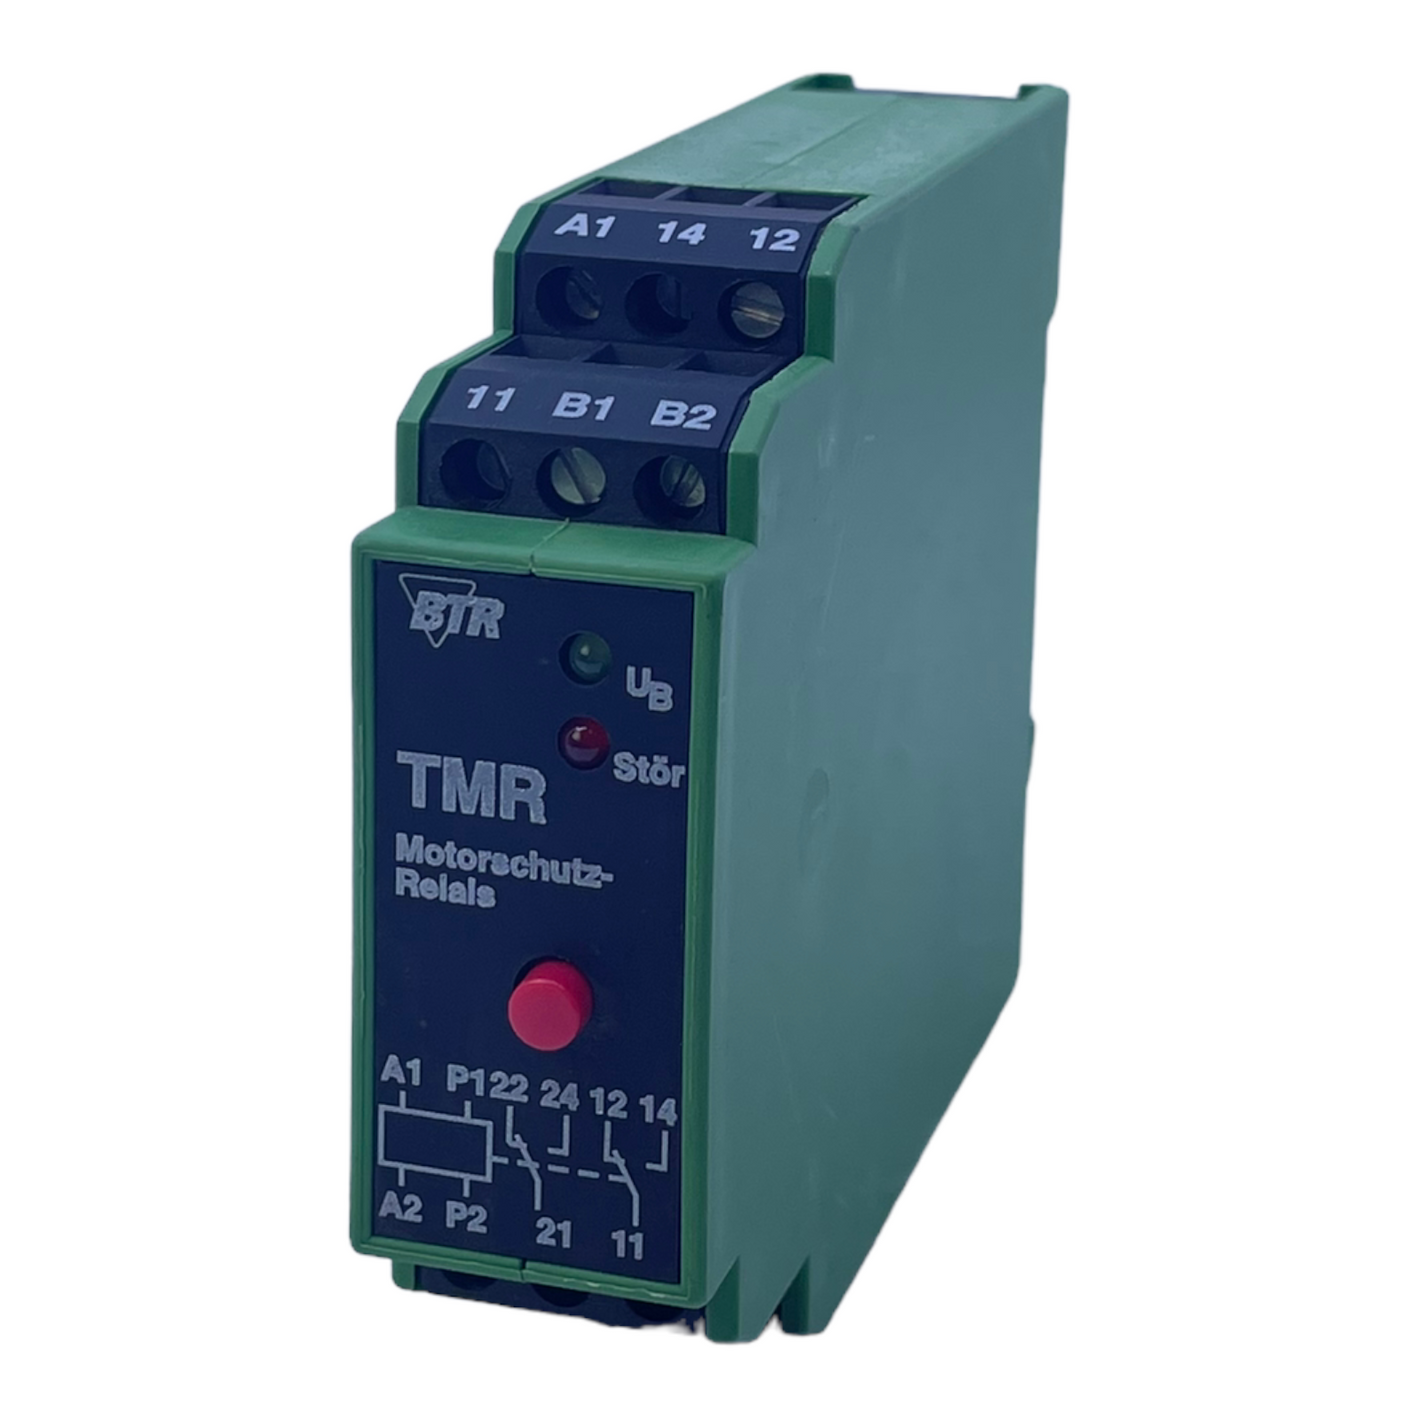 BTR TMR motor protection relay 230V 50-60 Hz motor relay protection relay TMR relay